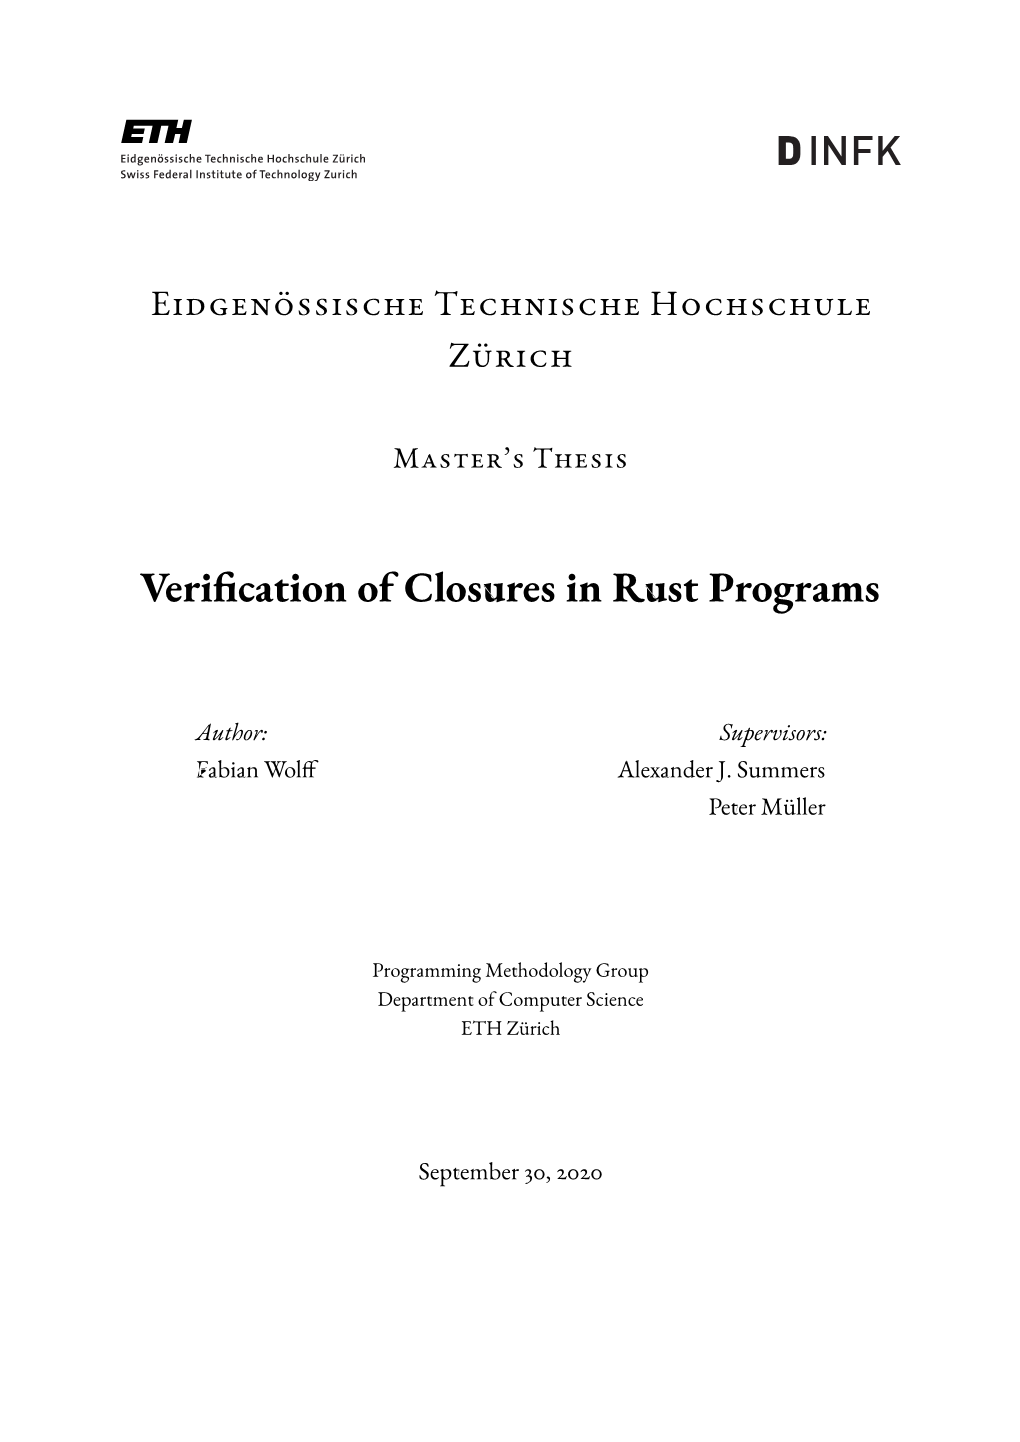 Veri Cation of Closures in Rust Programs